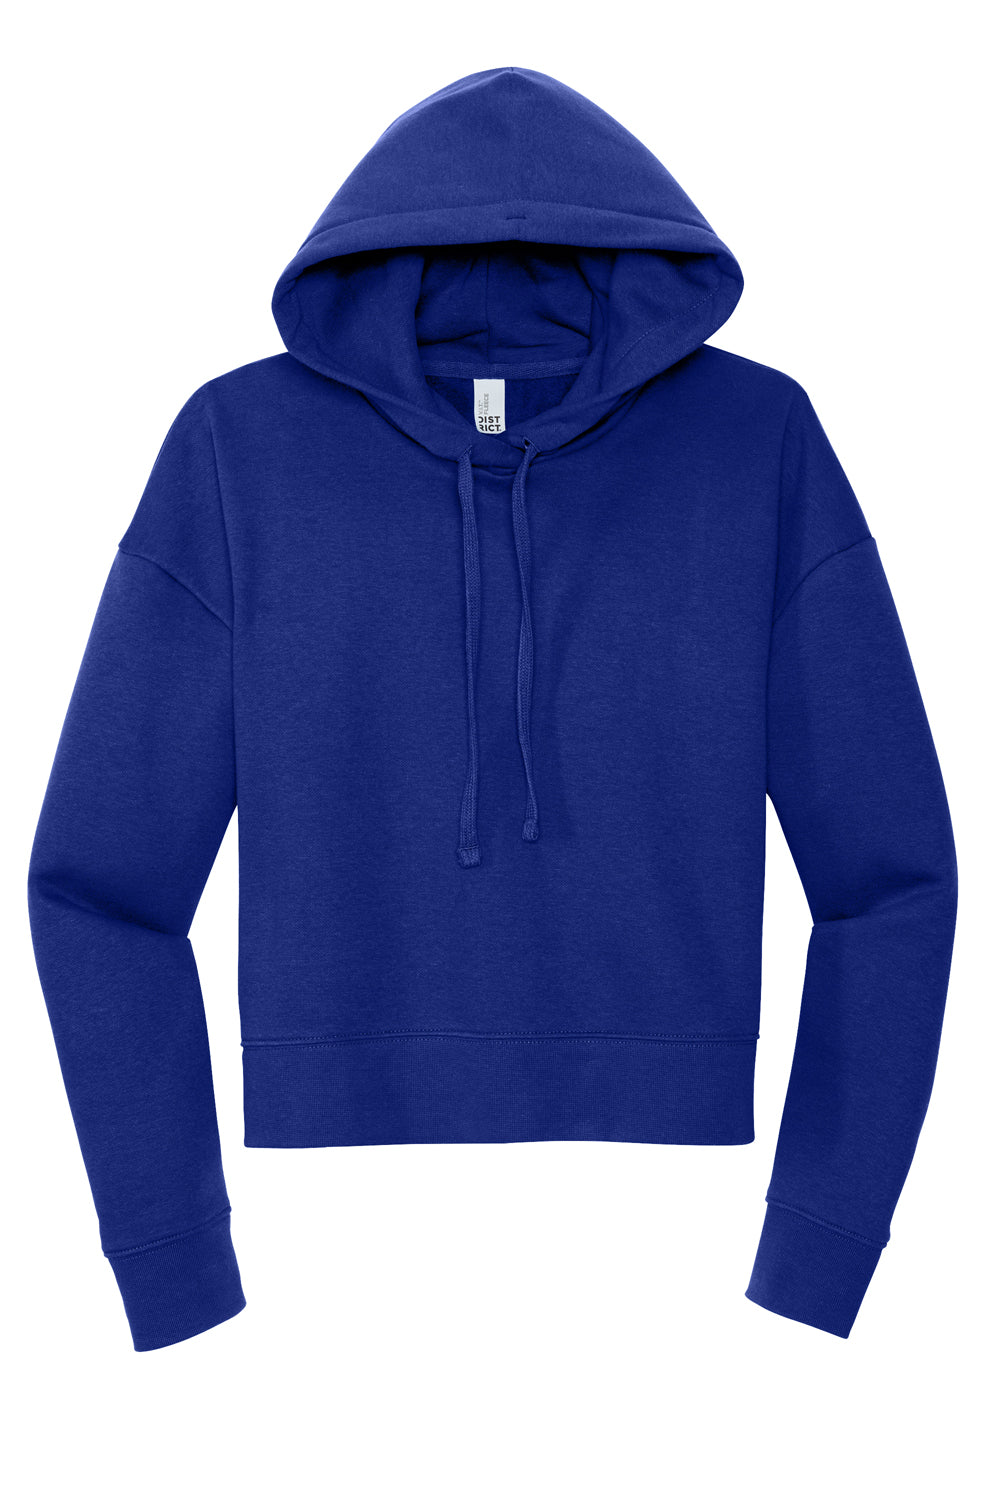 District DT6101 V.I.T. Fleece Hooded Sweatshirt Hoodie Deep Royal Blue Flat Front